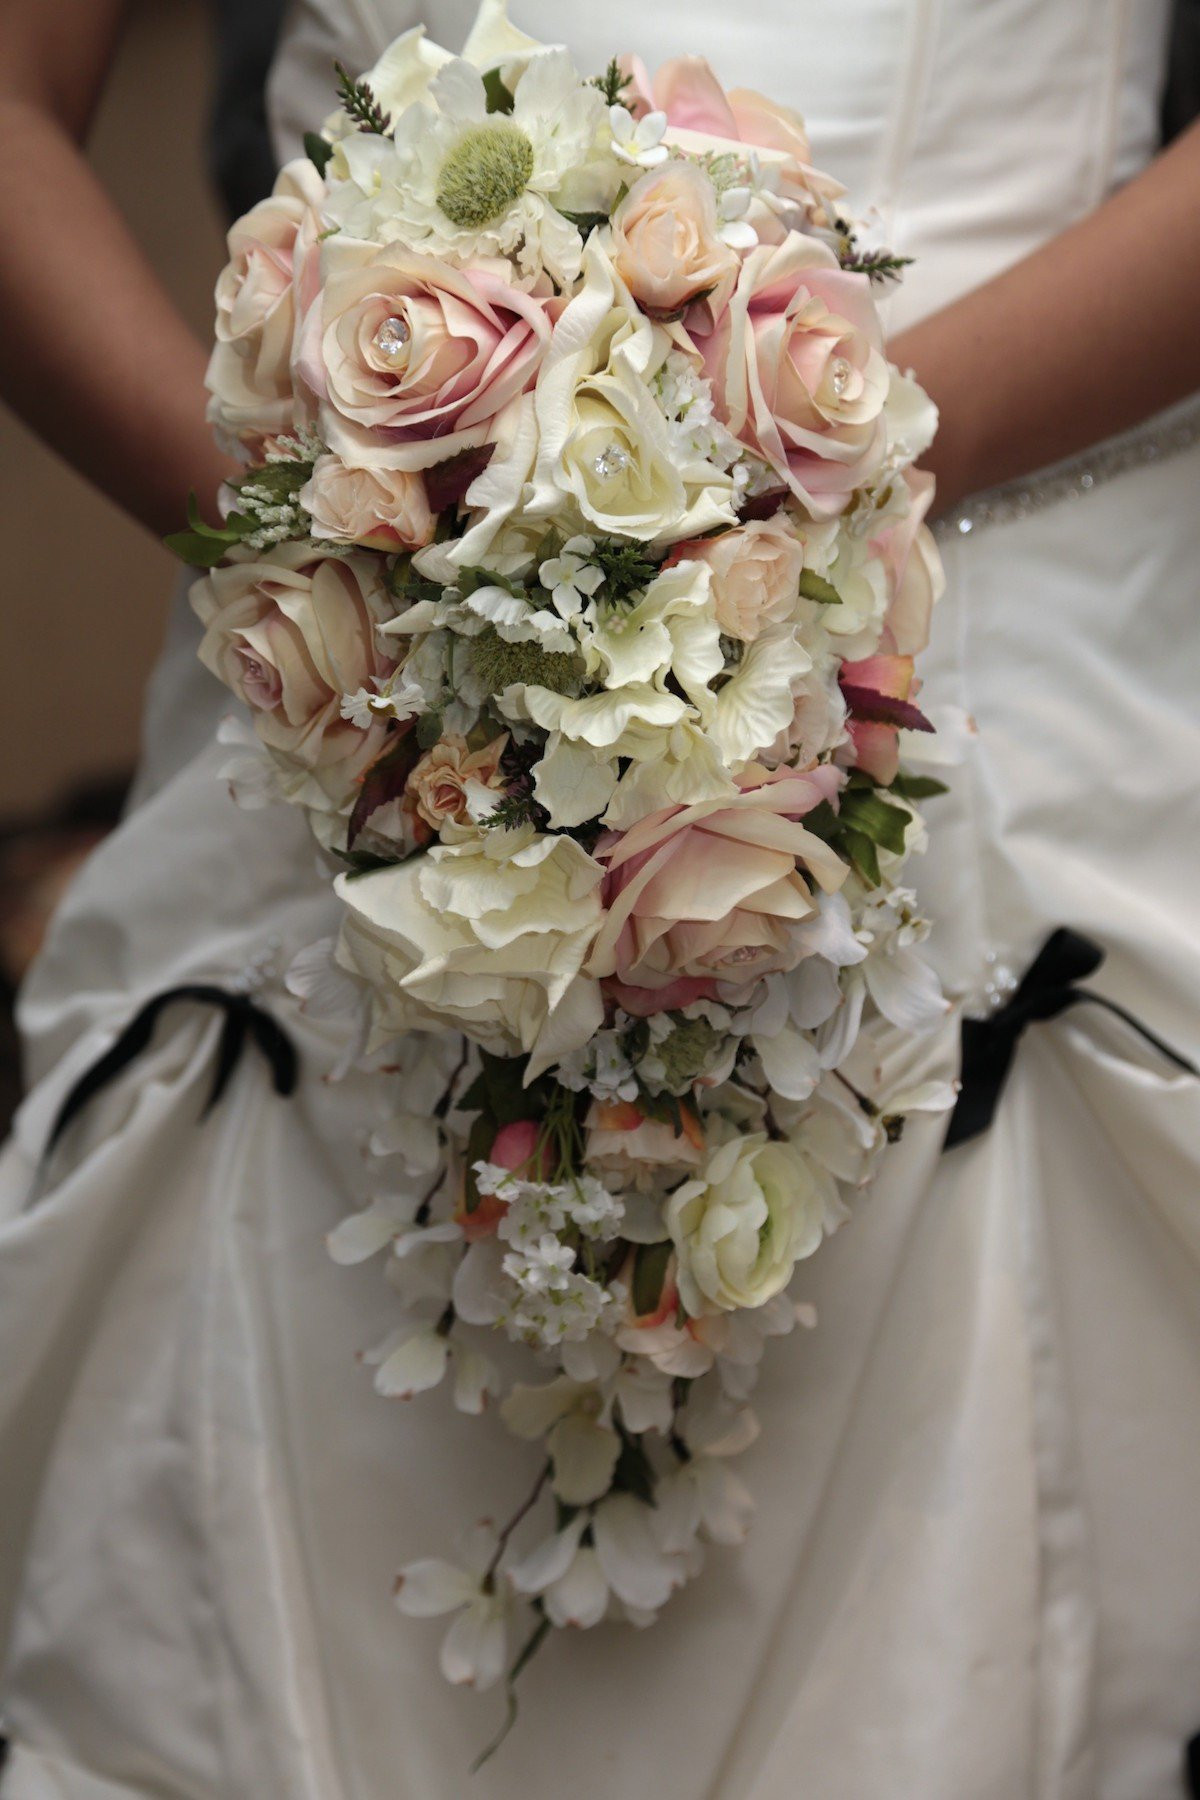 Silk Wedding Flower Packages
 Foam Wedding Flowers By Buds2Blossom